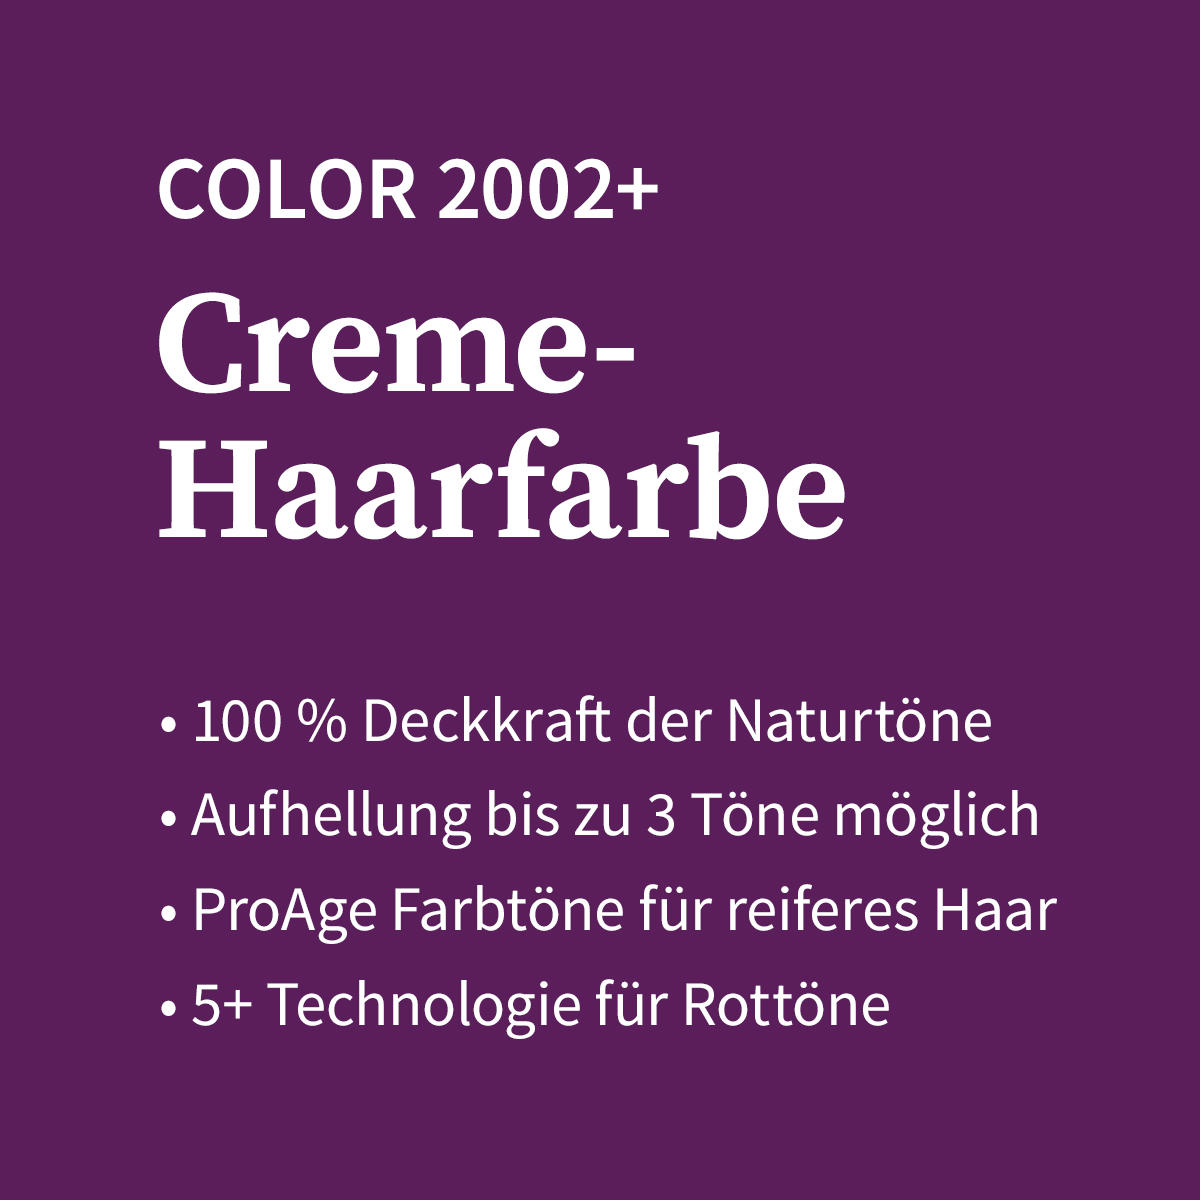 Basler Color 2002+ Cremehaarfarbe 3/66 dunkelbraun violett intensiv, Tube 60 ml - 4